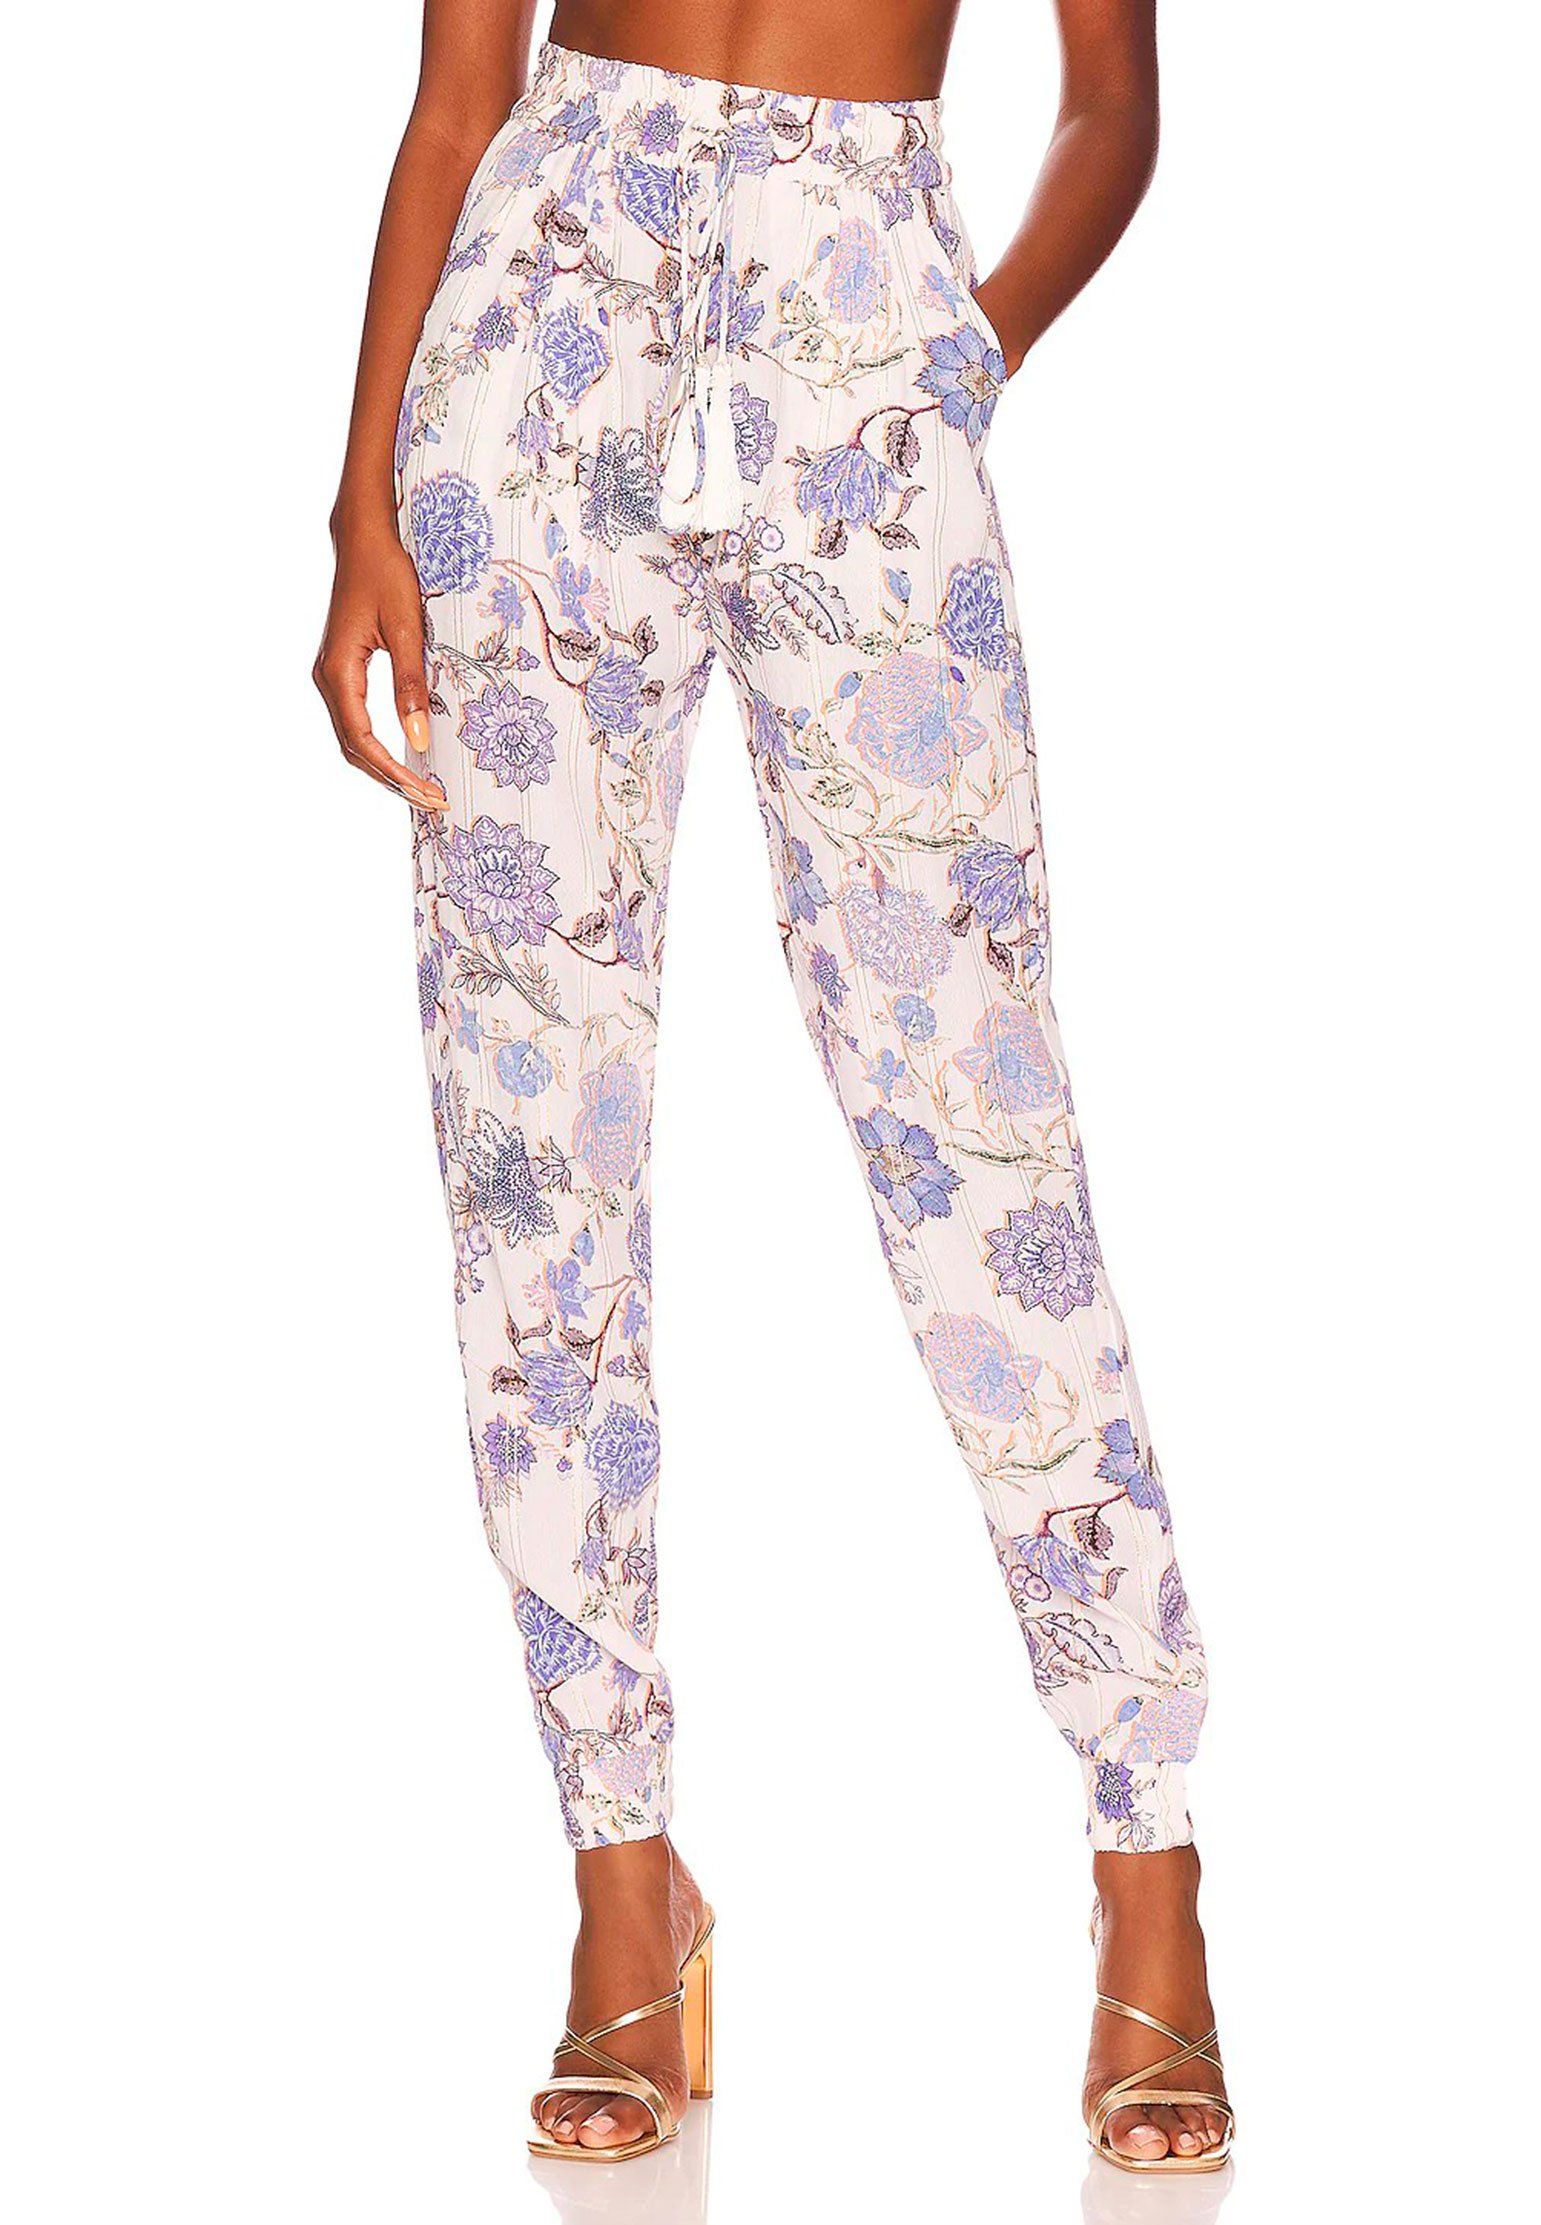 Pants HEMANT&NANDITA Color: lilas (Code: 1118) in online store Allure